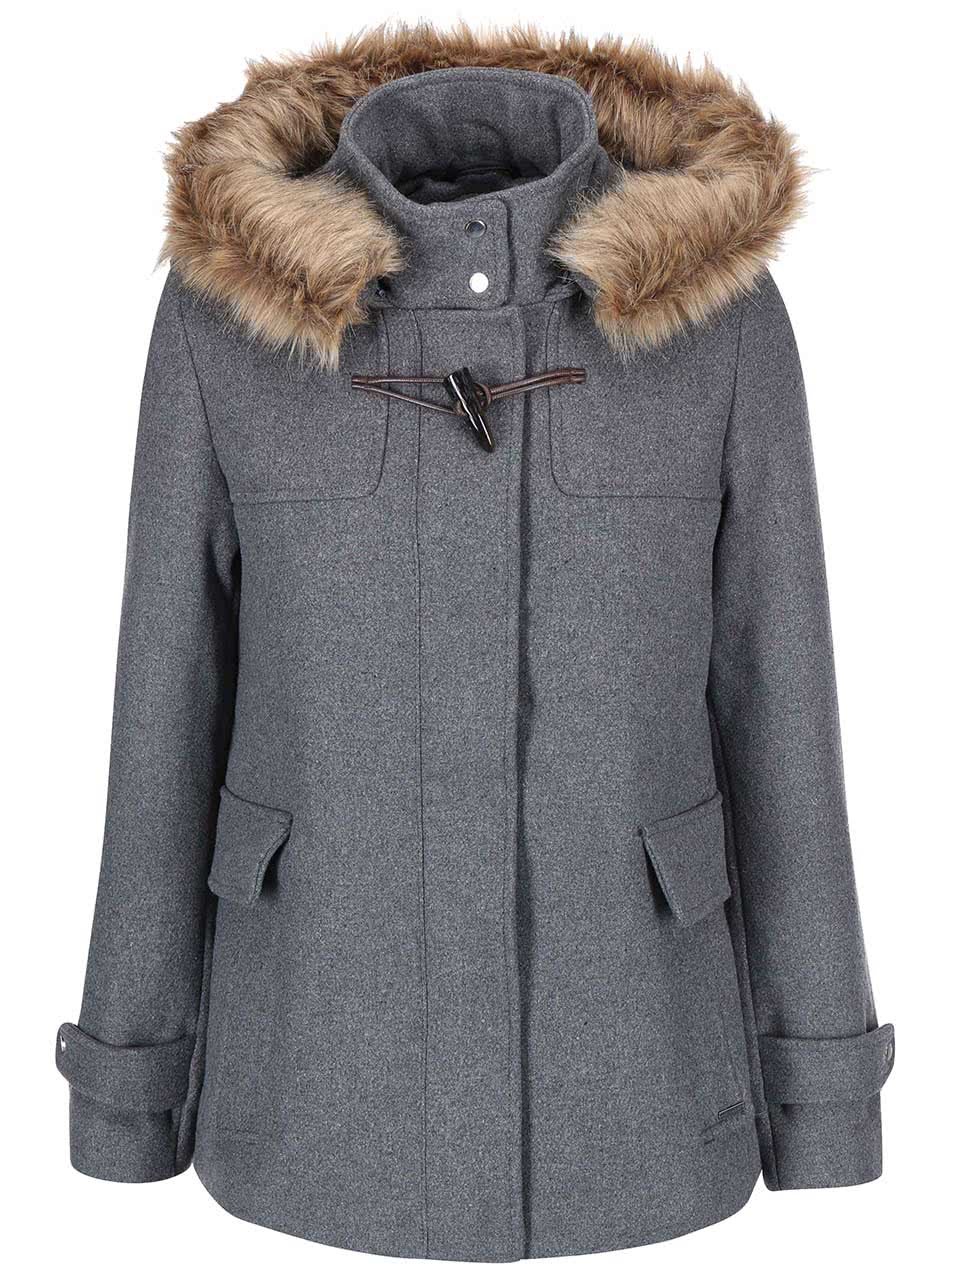 Šedý kabát s kapucí Vero Moda Camille